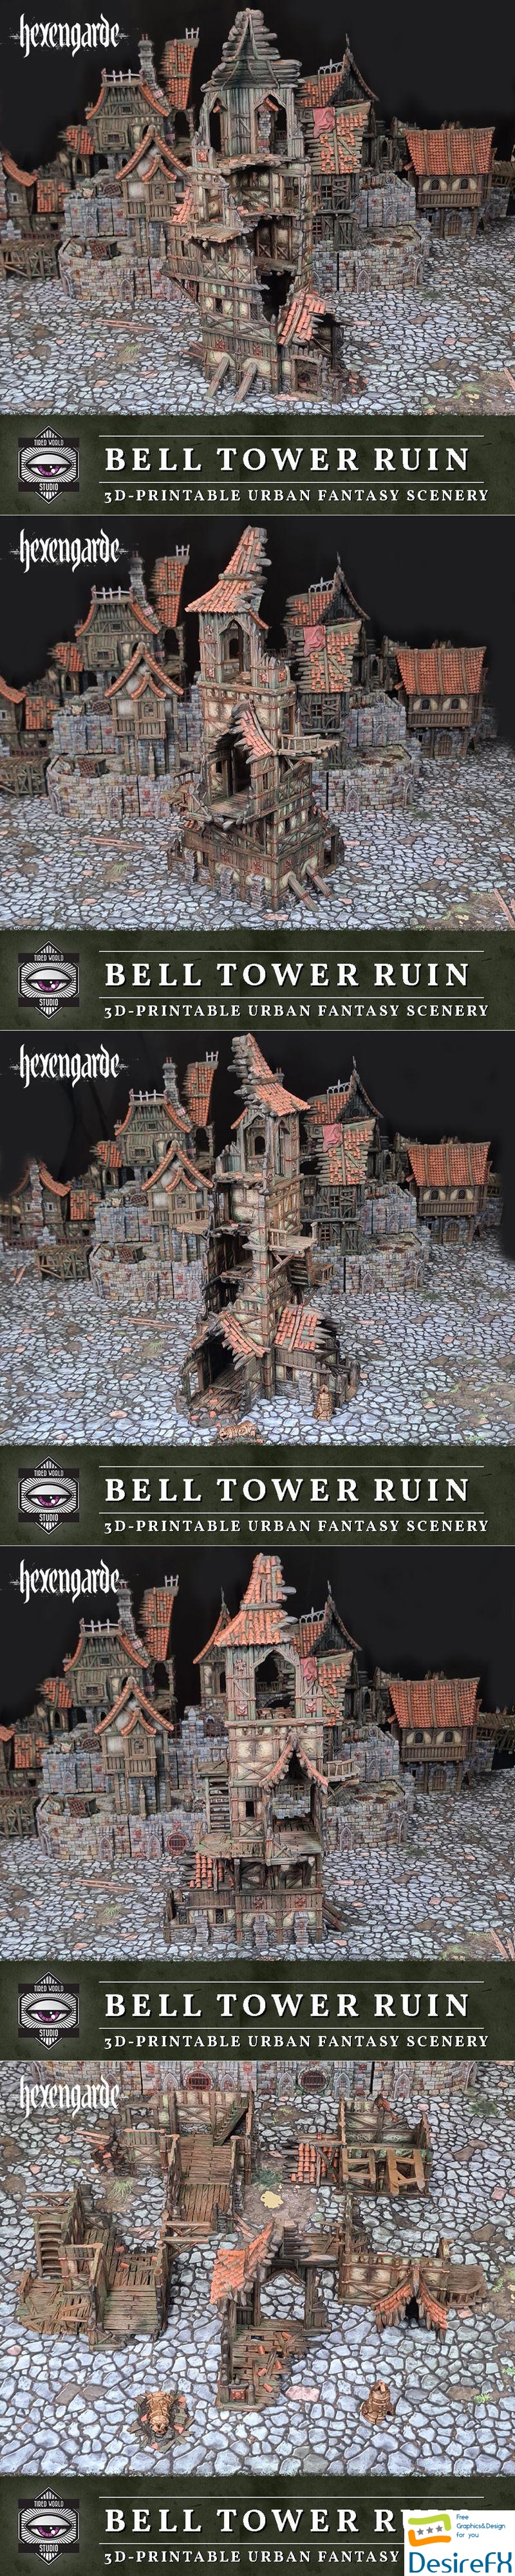 h3Bell Tower Ruin 3D Print